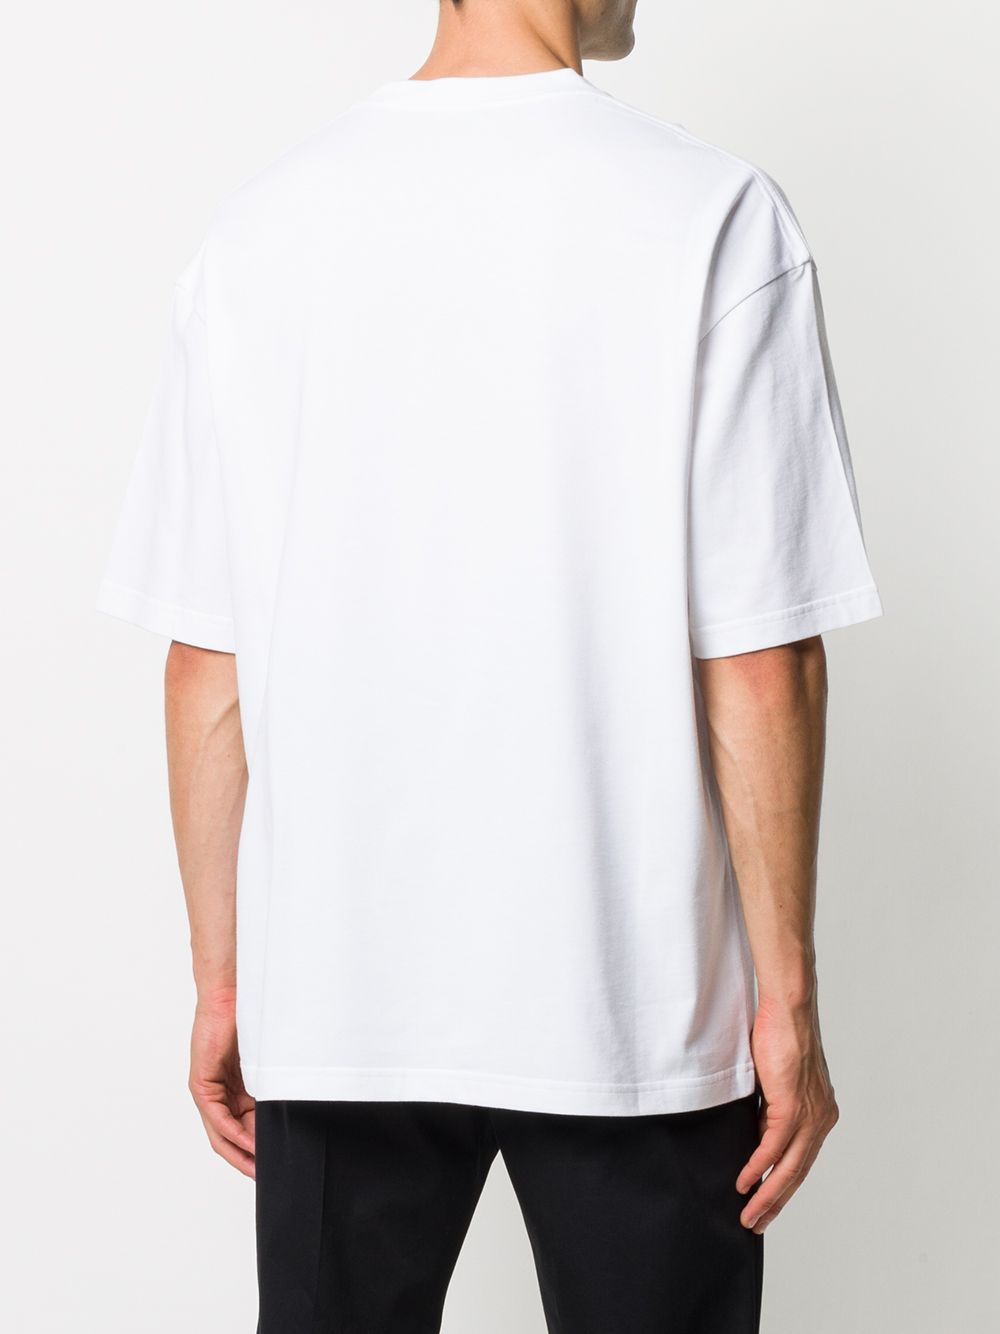 фото Balenciaga футболка с короткими рукавами и логотипом